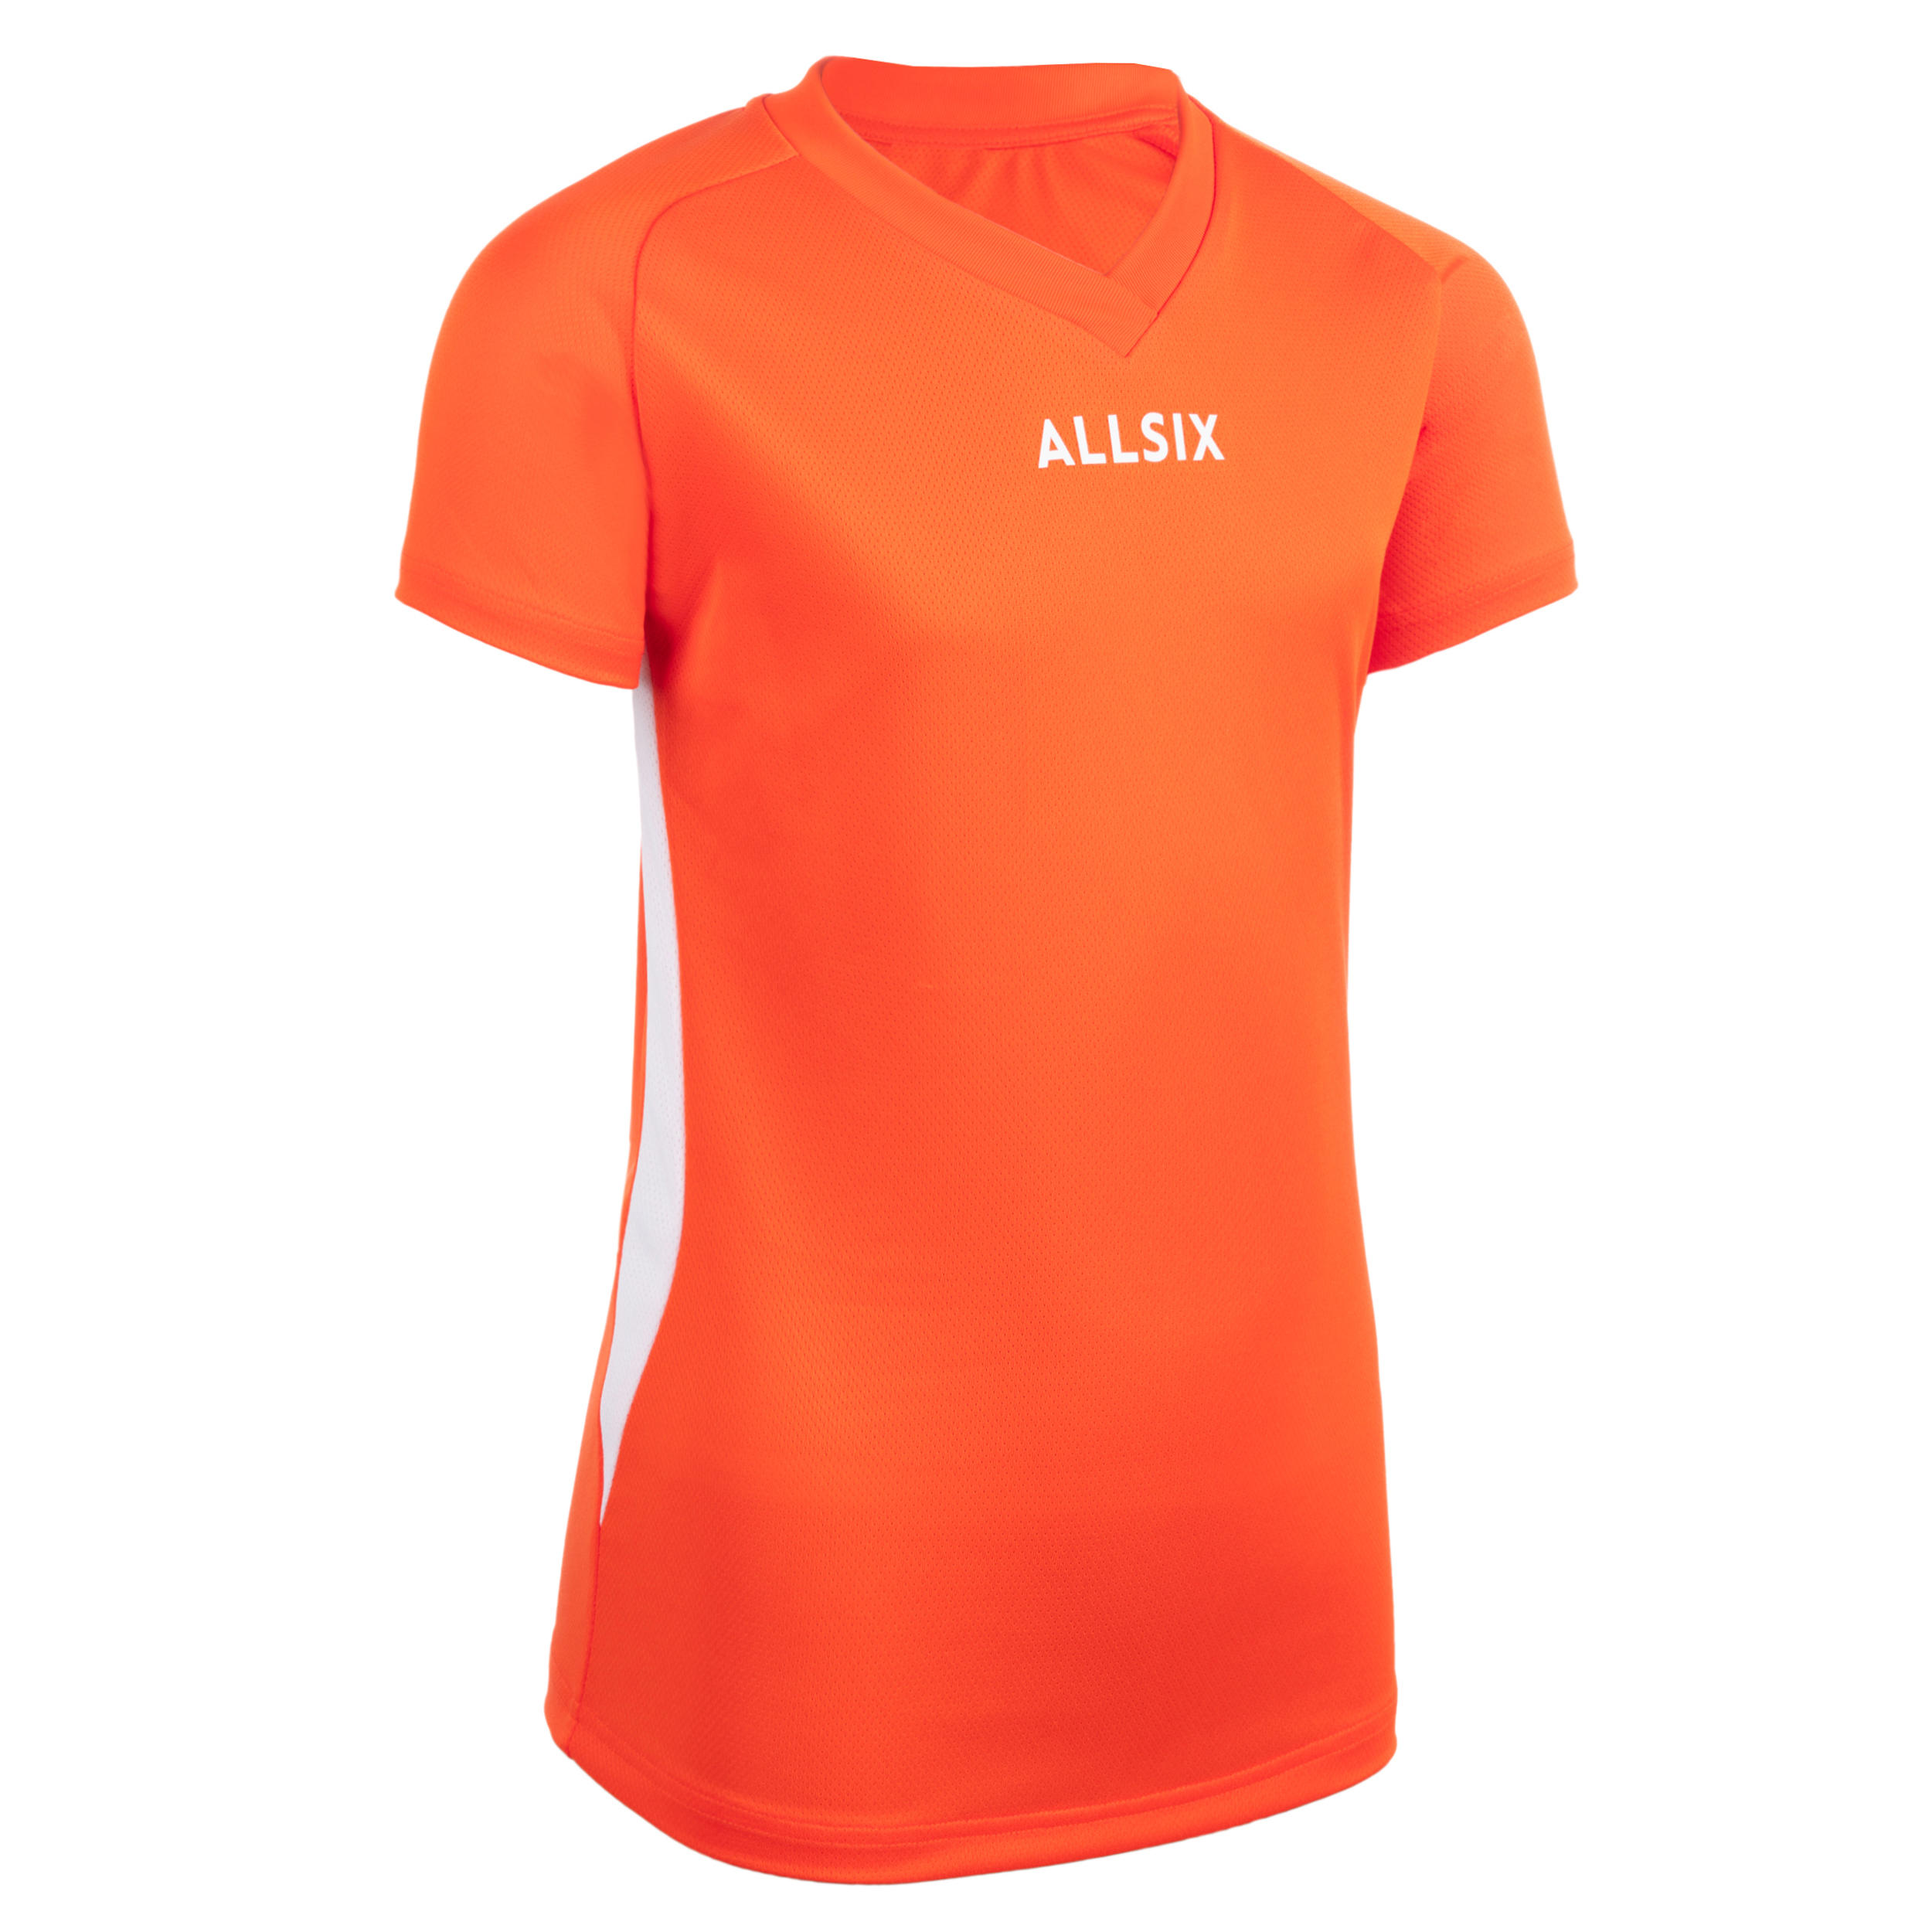 ALLSIX V100 Girls' Volleyball Jersey - Orange